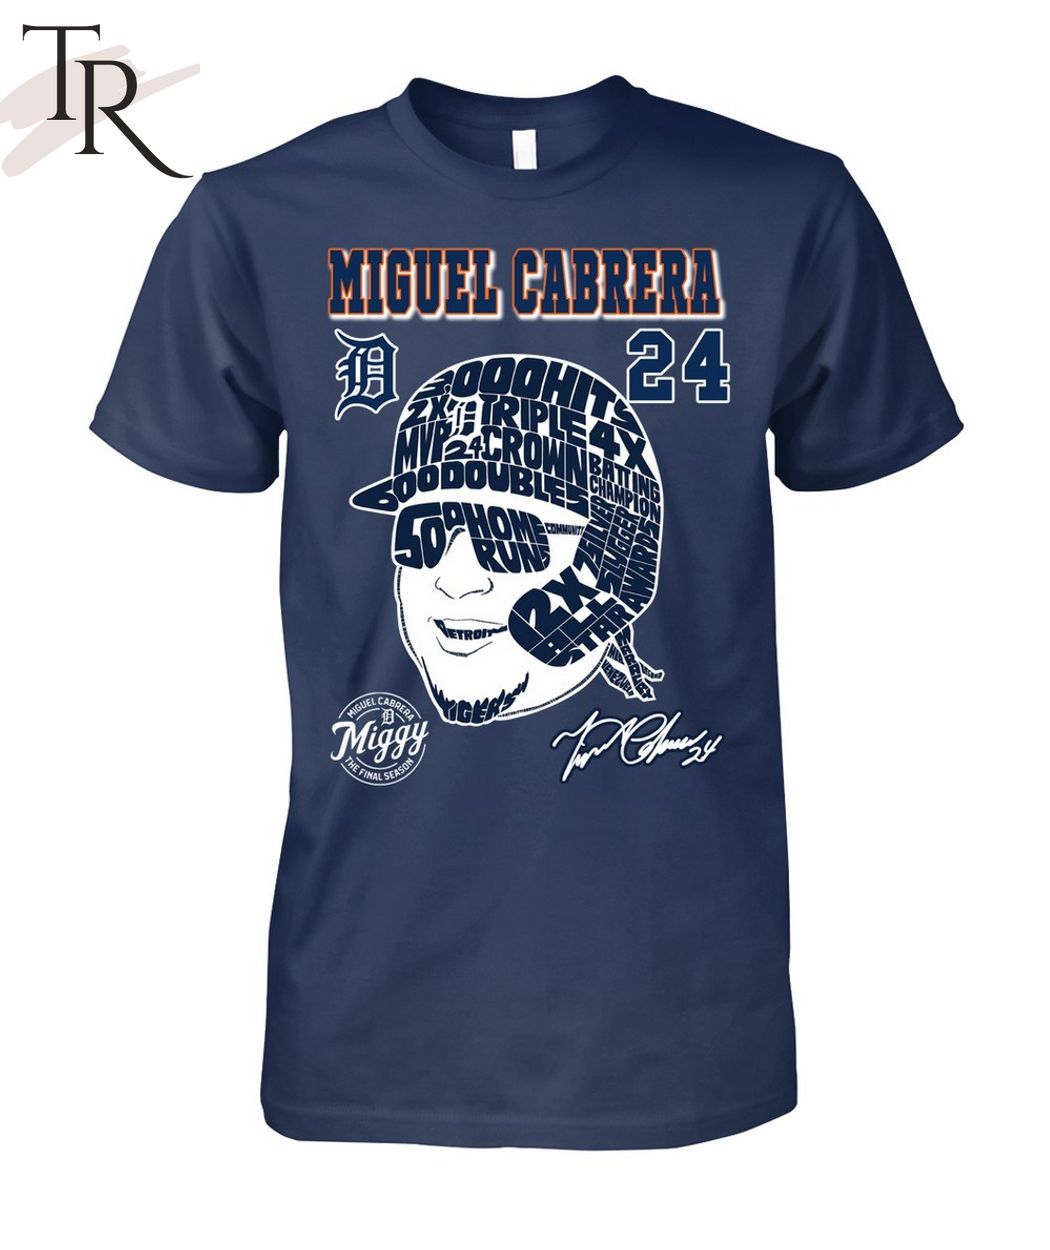 Miguel Cabrera 24 Miggy The Final Season Signature T-shirt